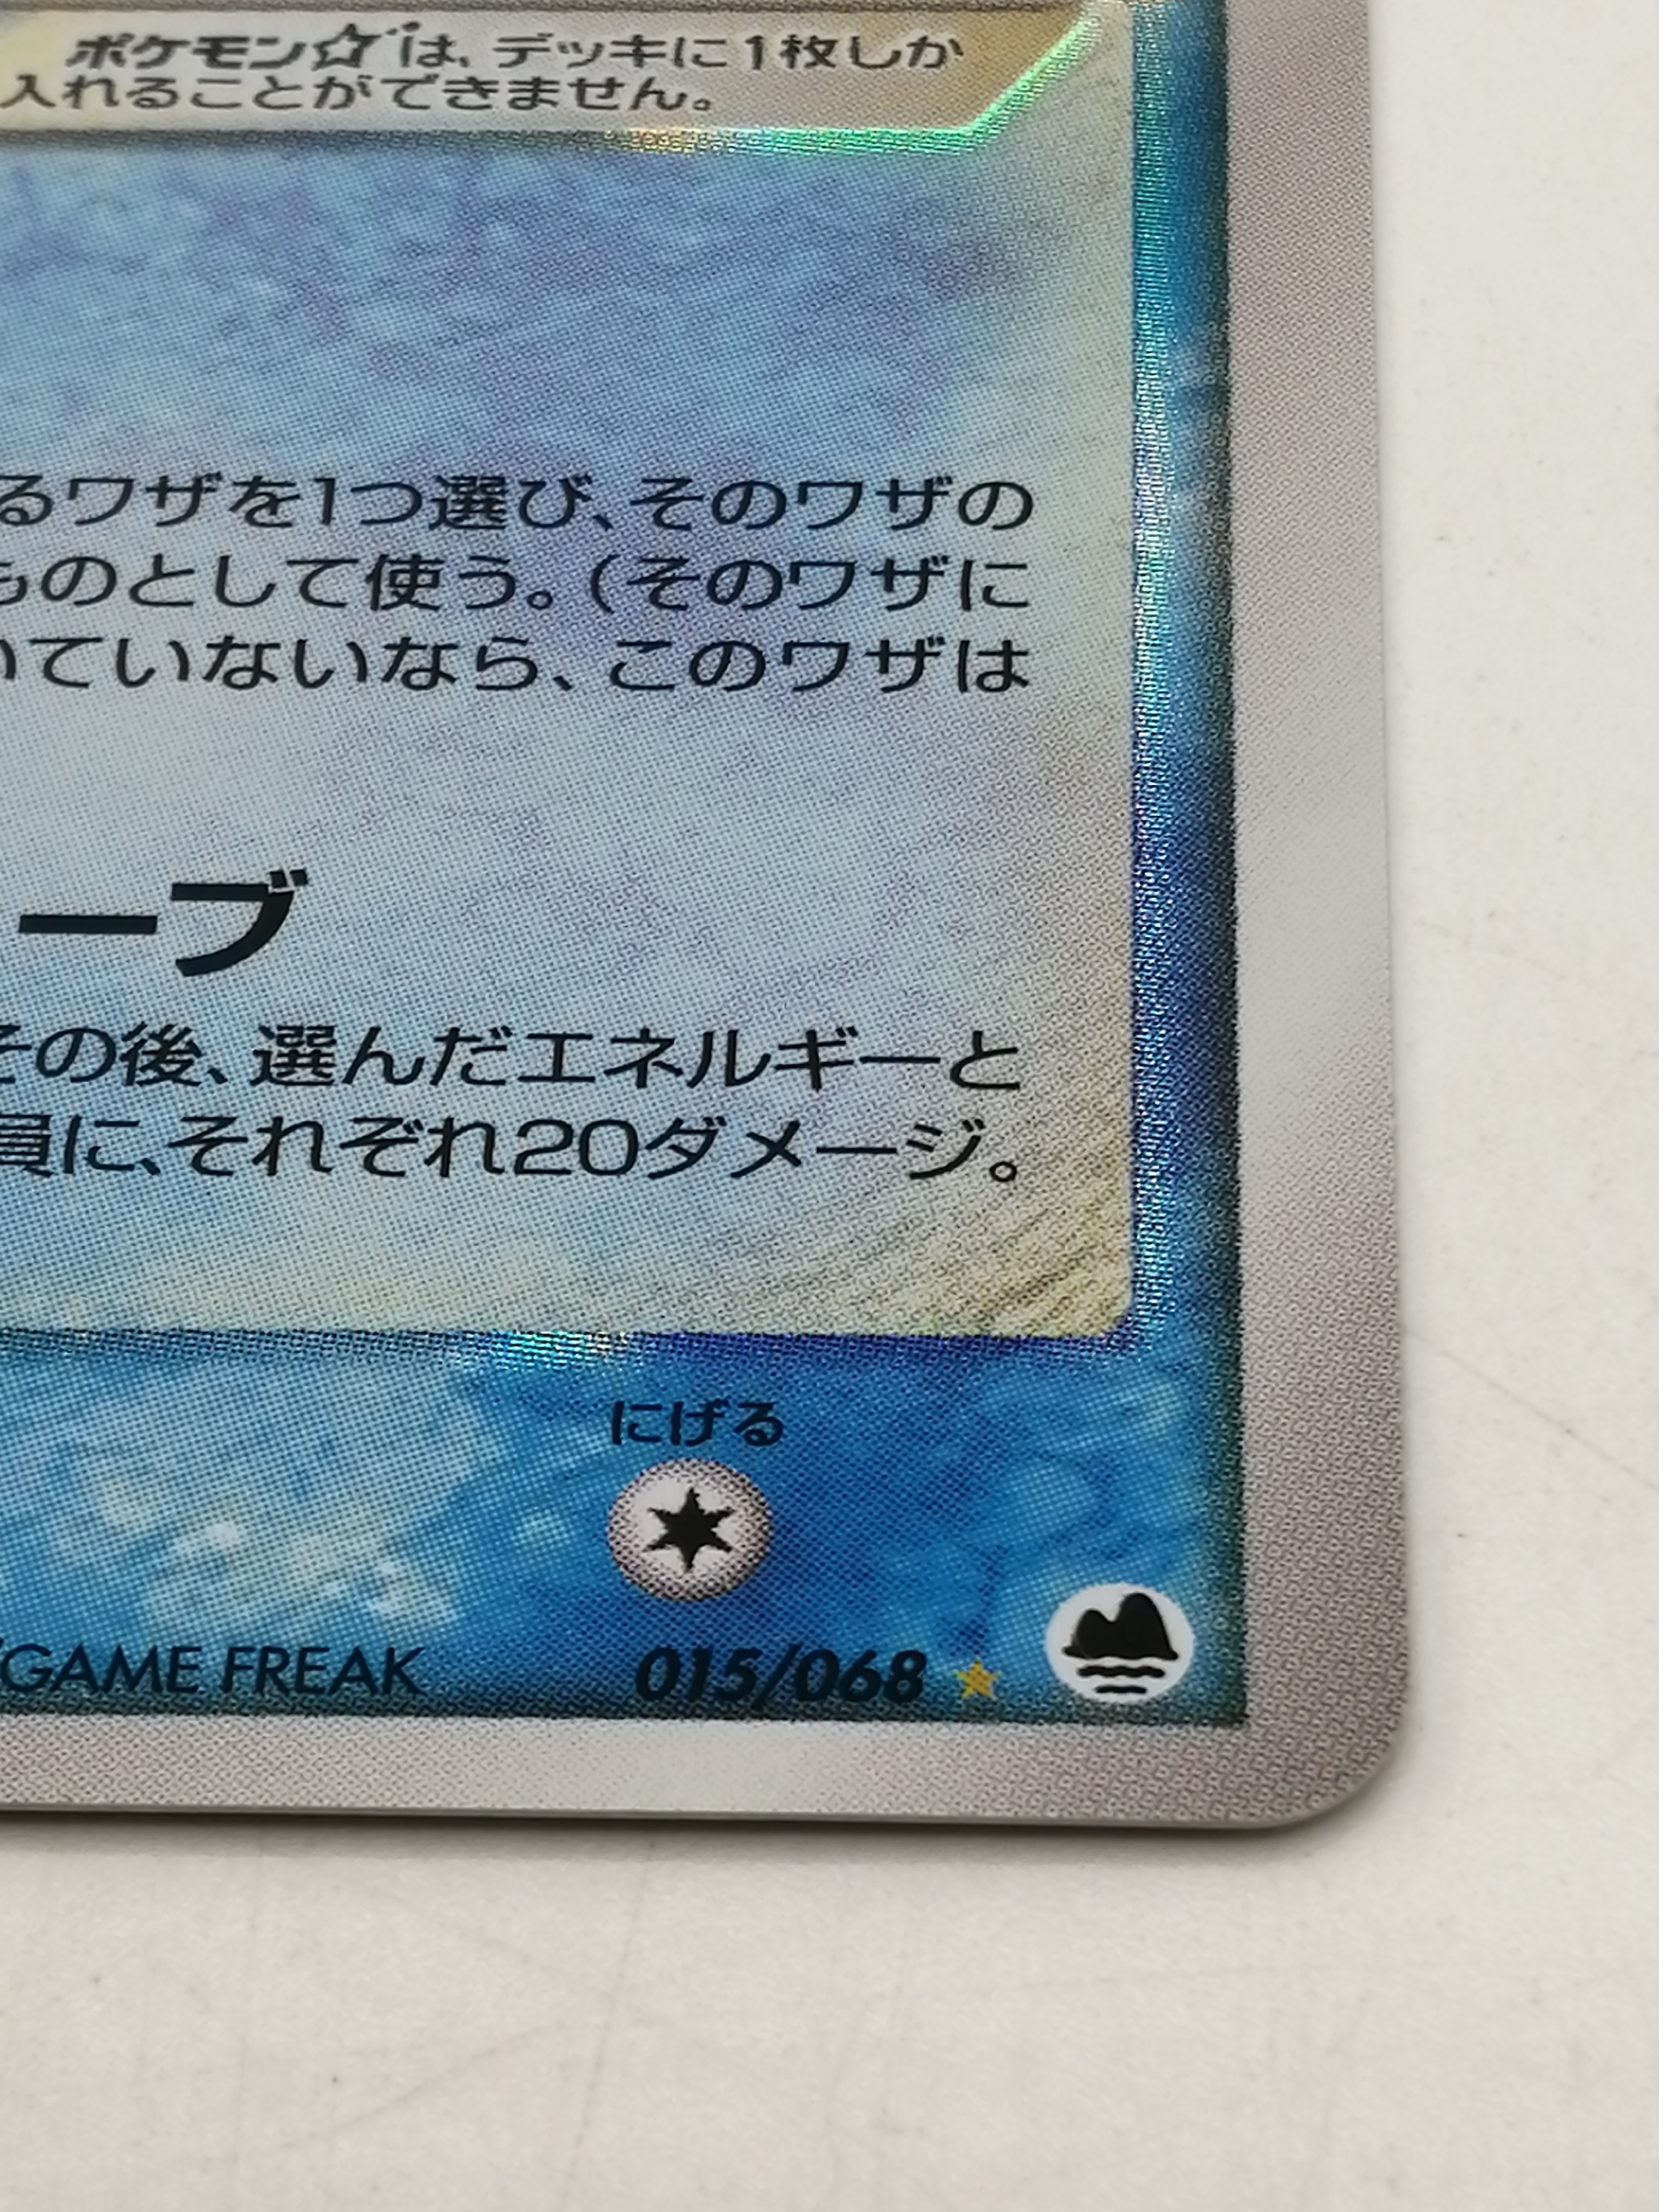 Mew Gold Star Delta Species 015/068 1st Edition Pokemon Card Japanese